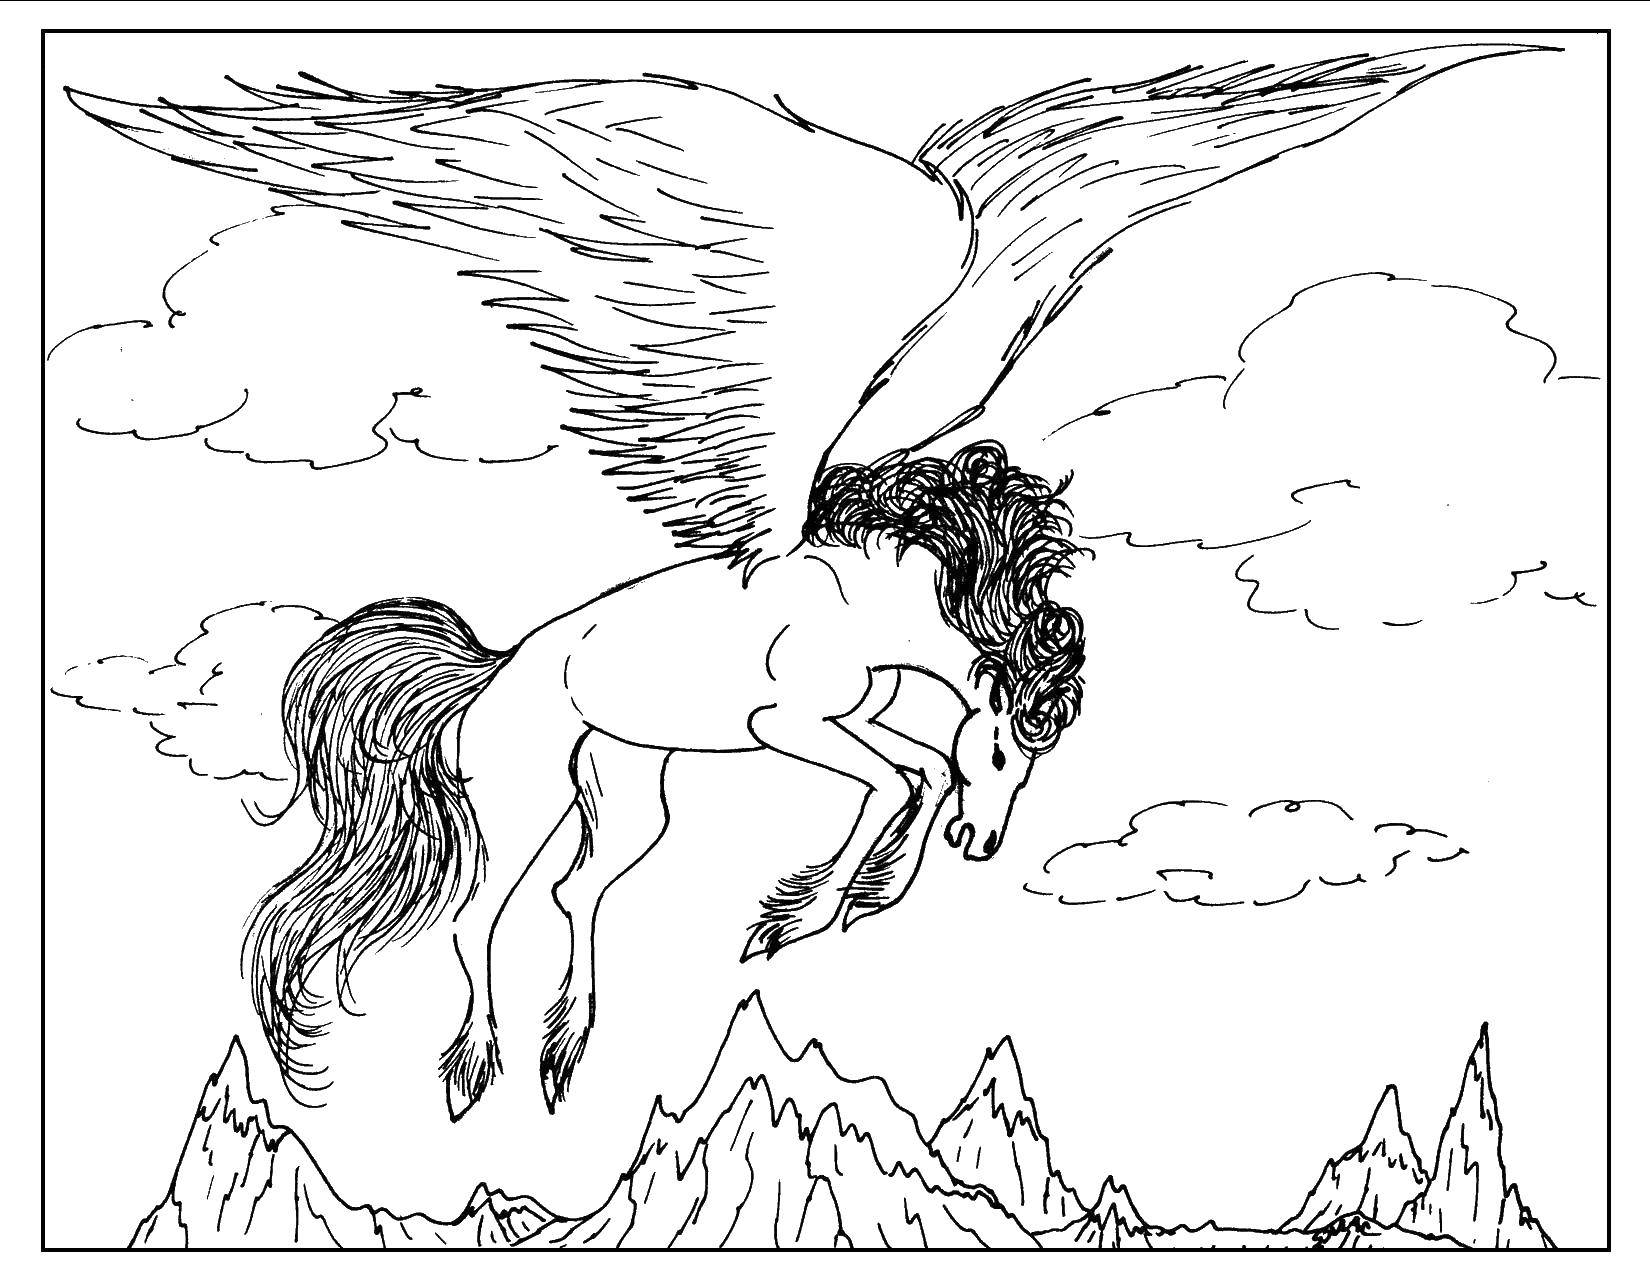 Coloring Pegasus. Category coloring. Tags:  The horse, wings, Pegasus.